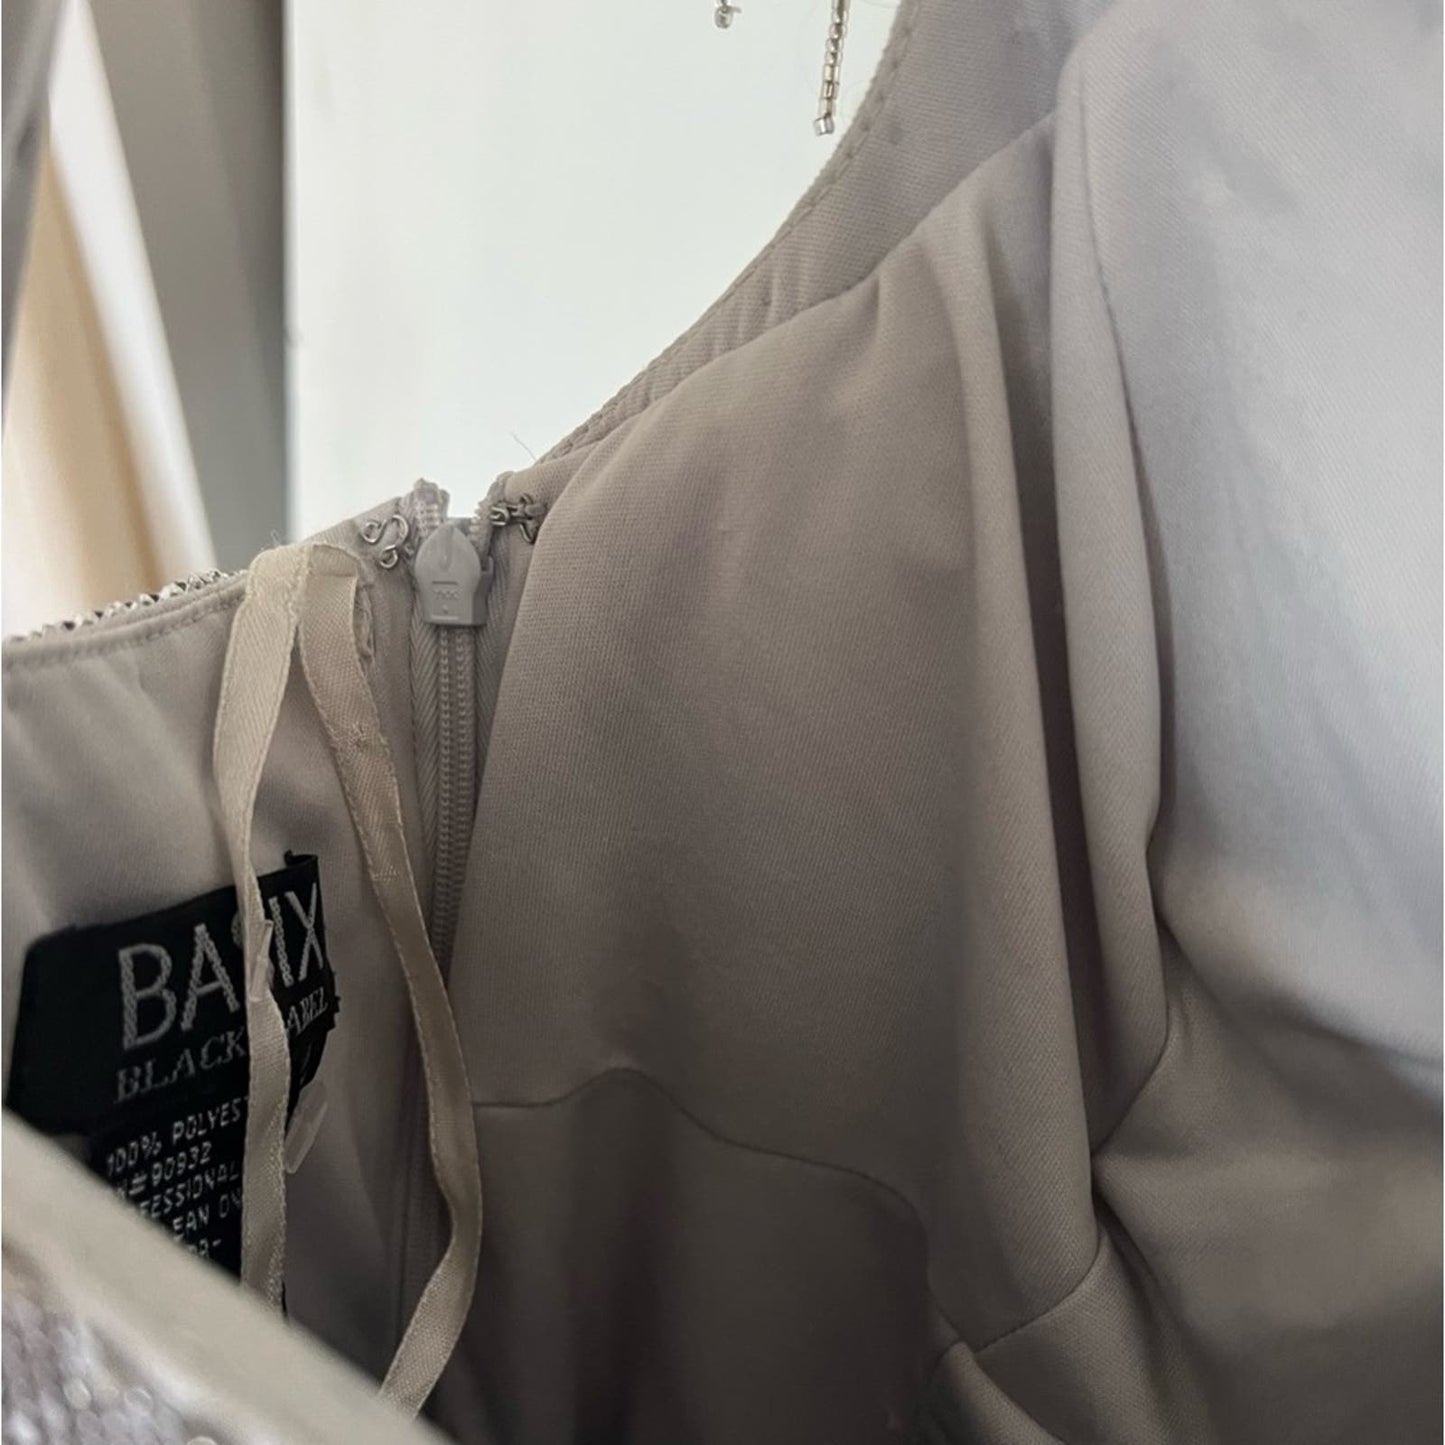 BASIX Black Label Silver Metallic Cochella Style Mini Dress •2